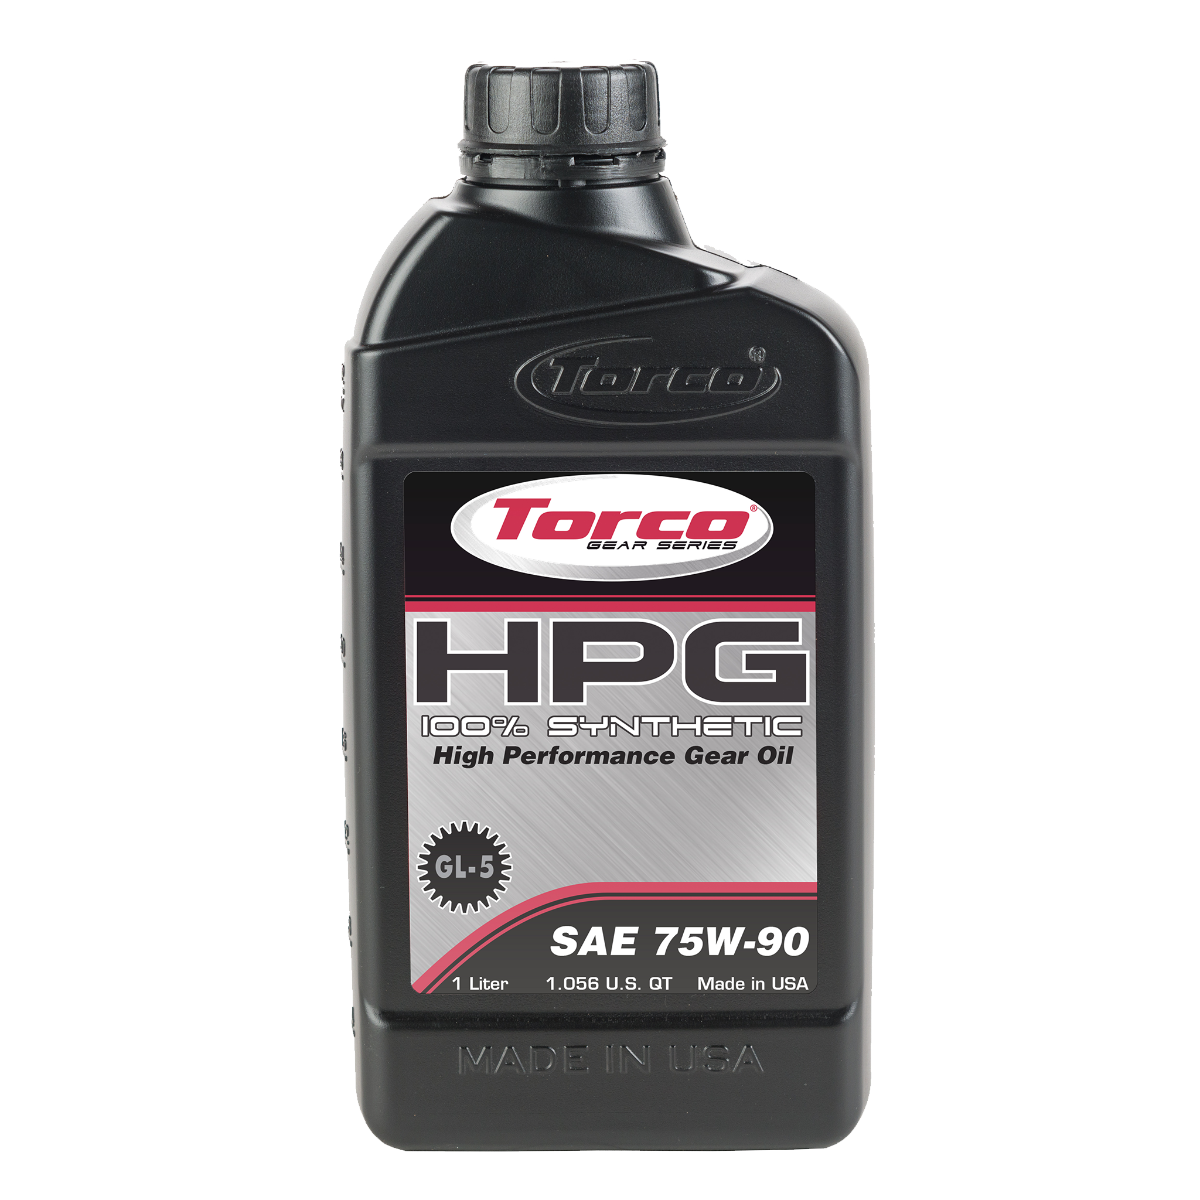 Torco HPG 高性能 100% 合成齿轮油